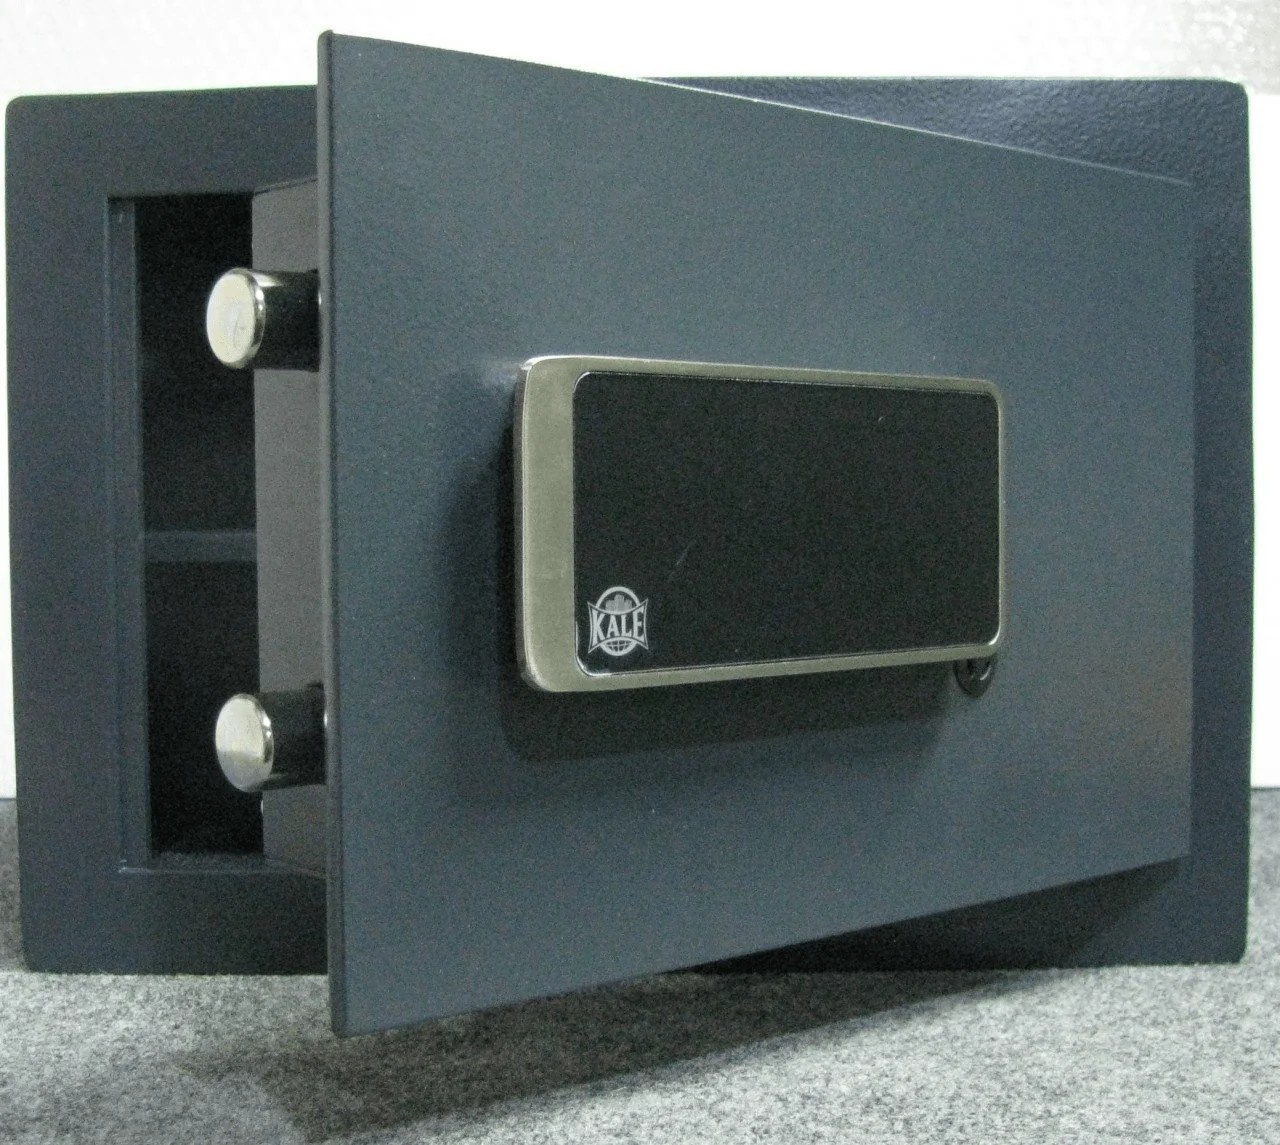 Kale Dokunmatik Motorlu Ev Ofis Tipi Dijital Para Kasası Krem - Kale KK ECO 250D